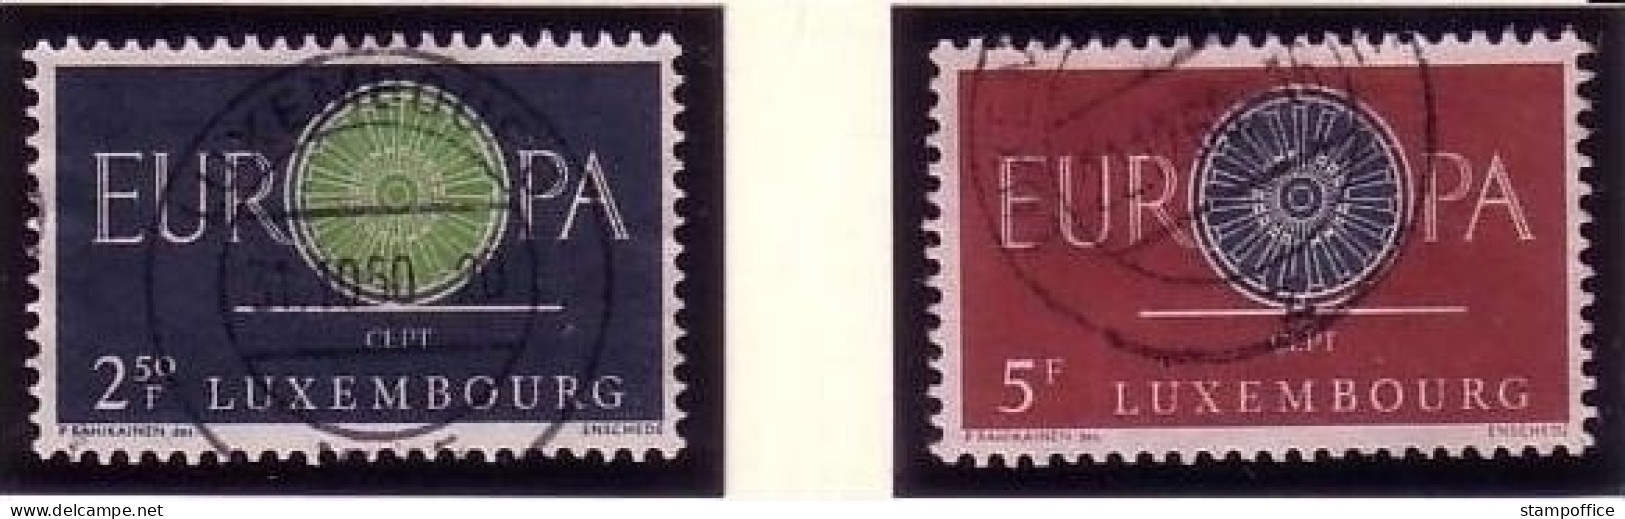 LUXEMBOURG MI-NR. 629-630 GESTEMPELT(USED) EUROPA 1960 WAGENRAD - 1960